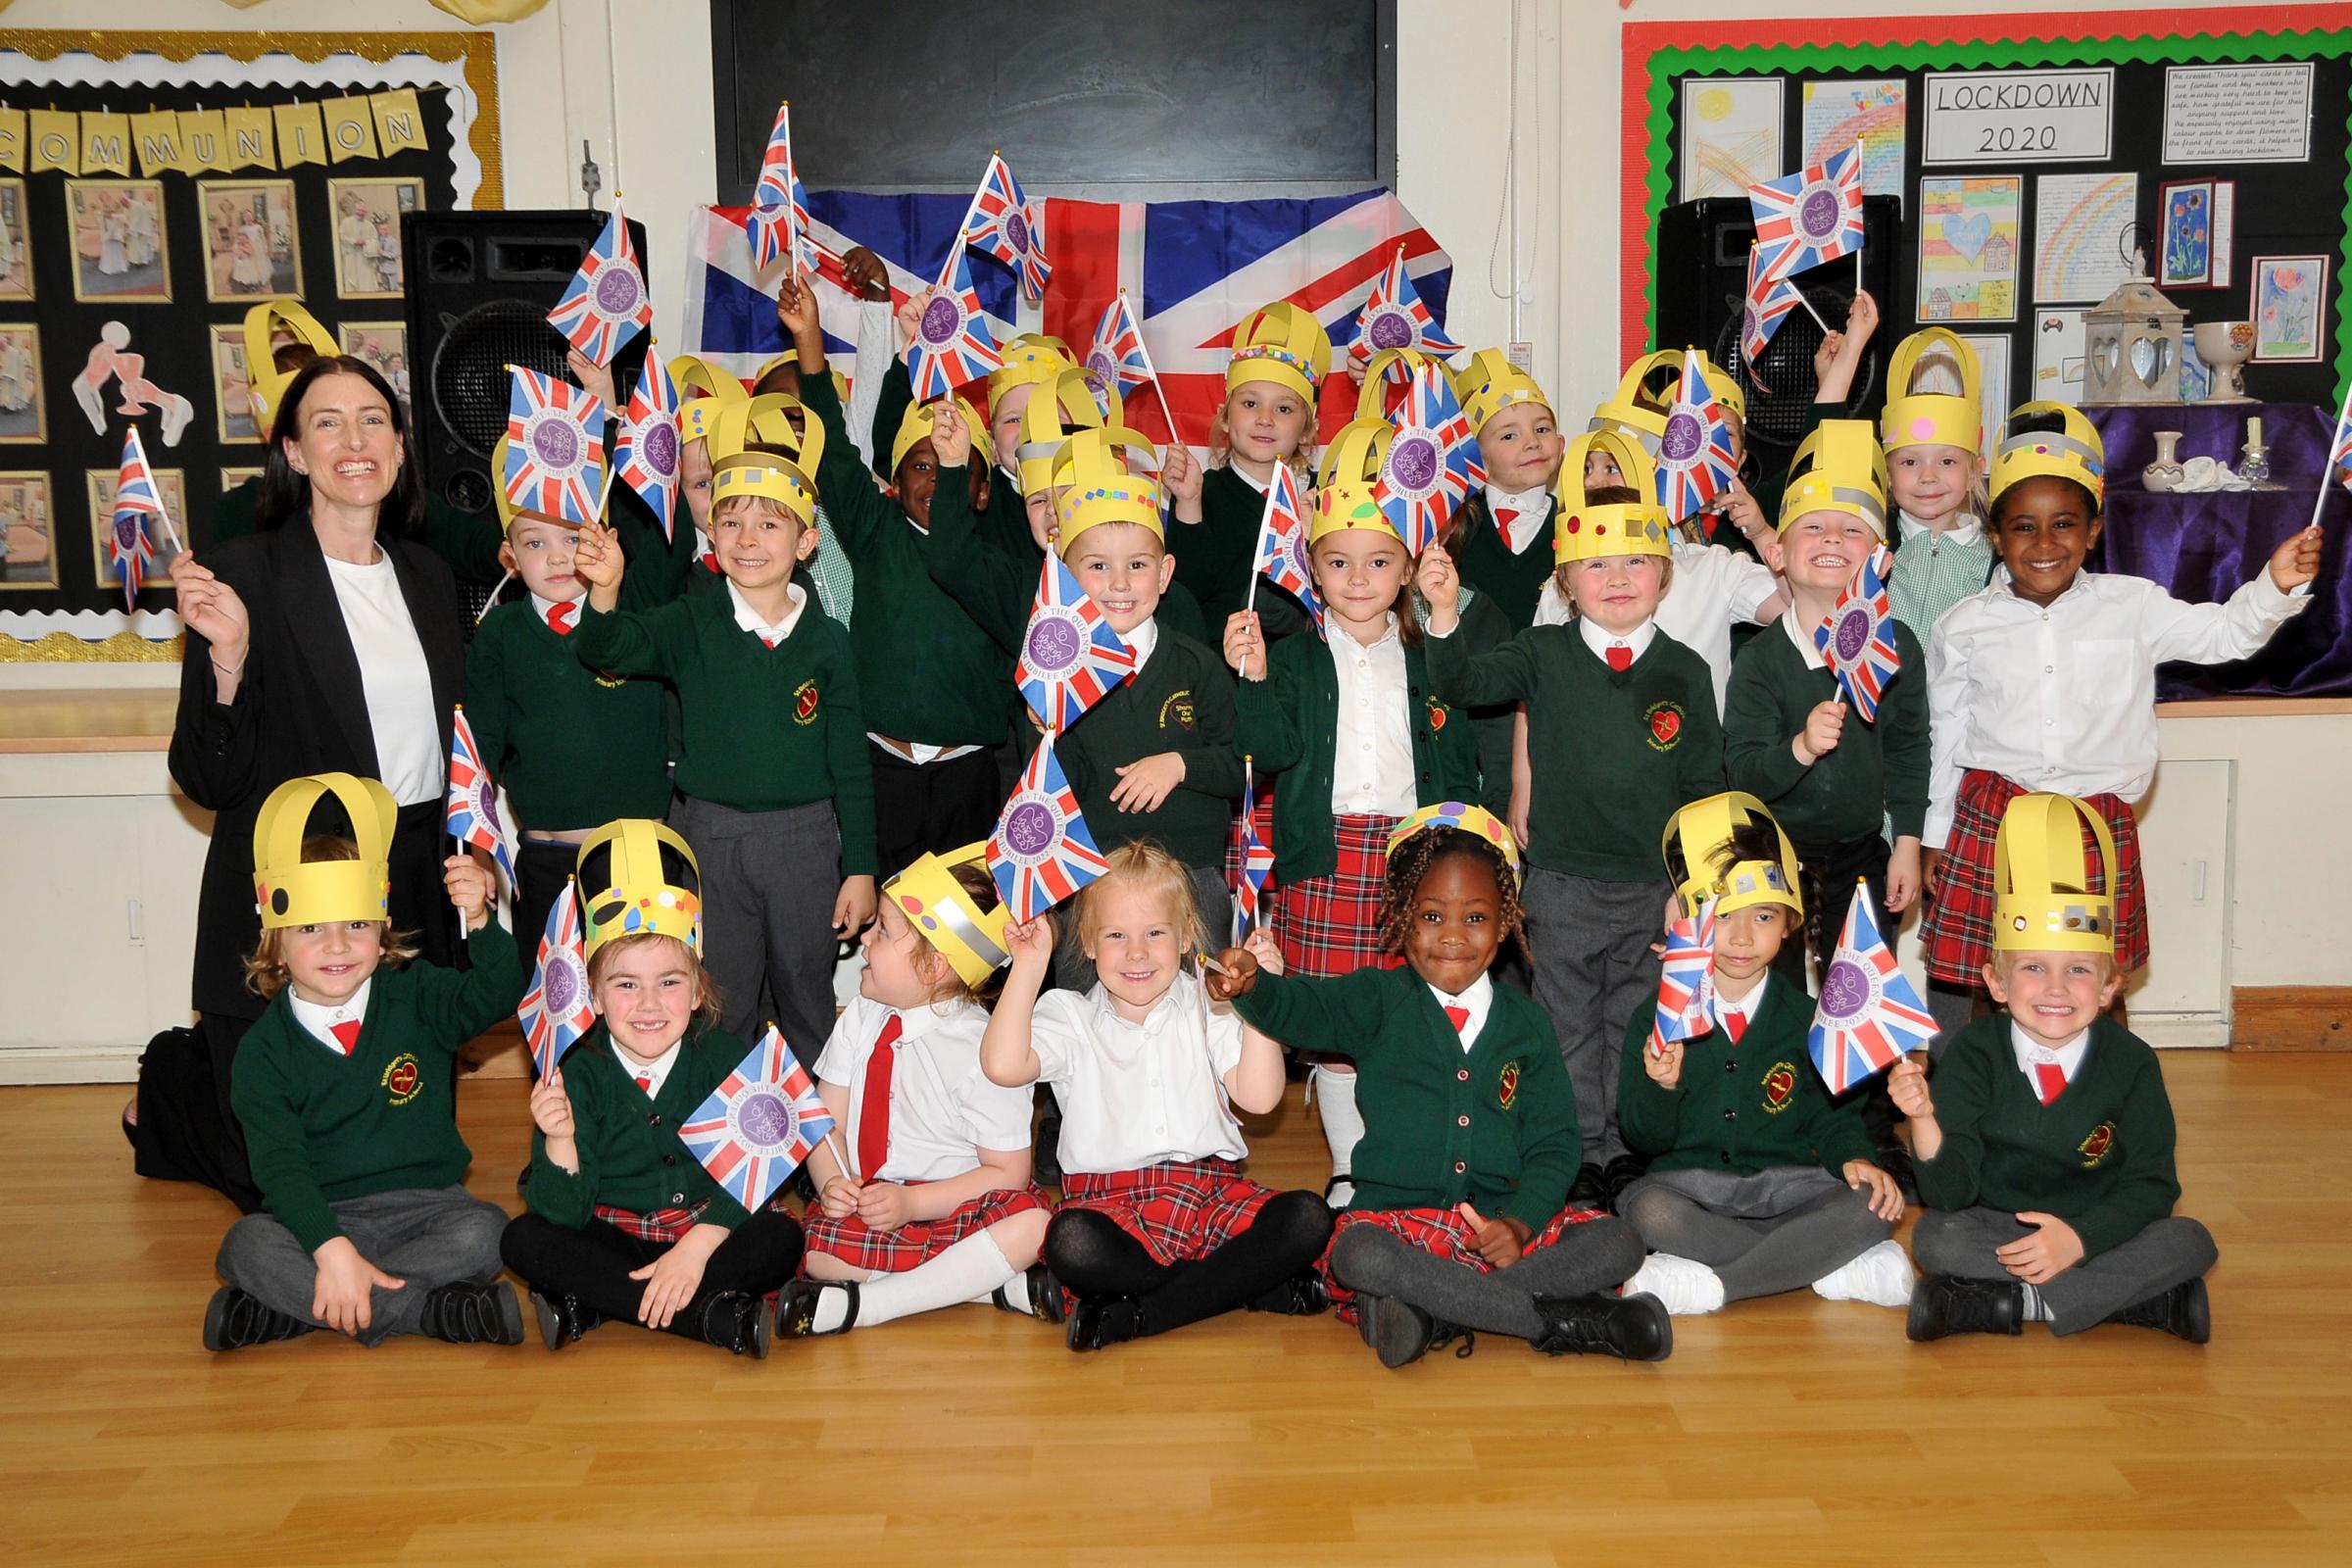 St Bridgets Catholic Primary School held a day of Platinum Jubilee-themed fun